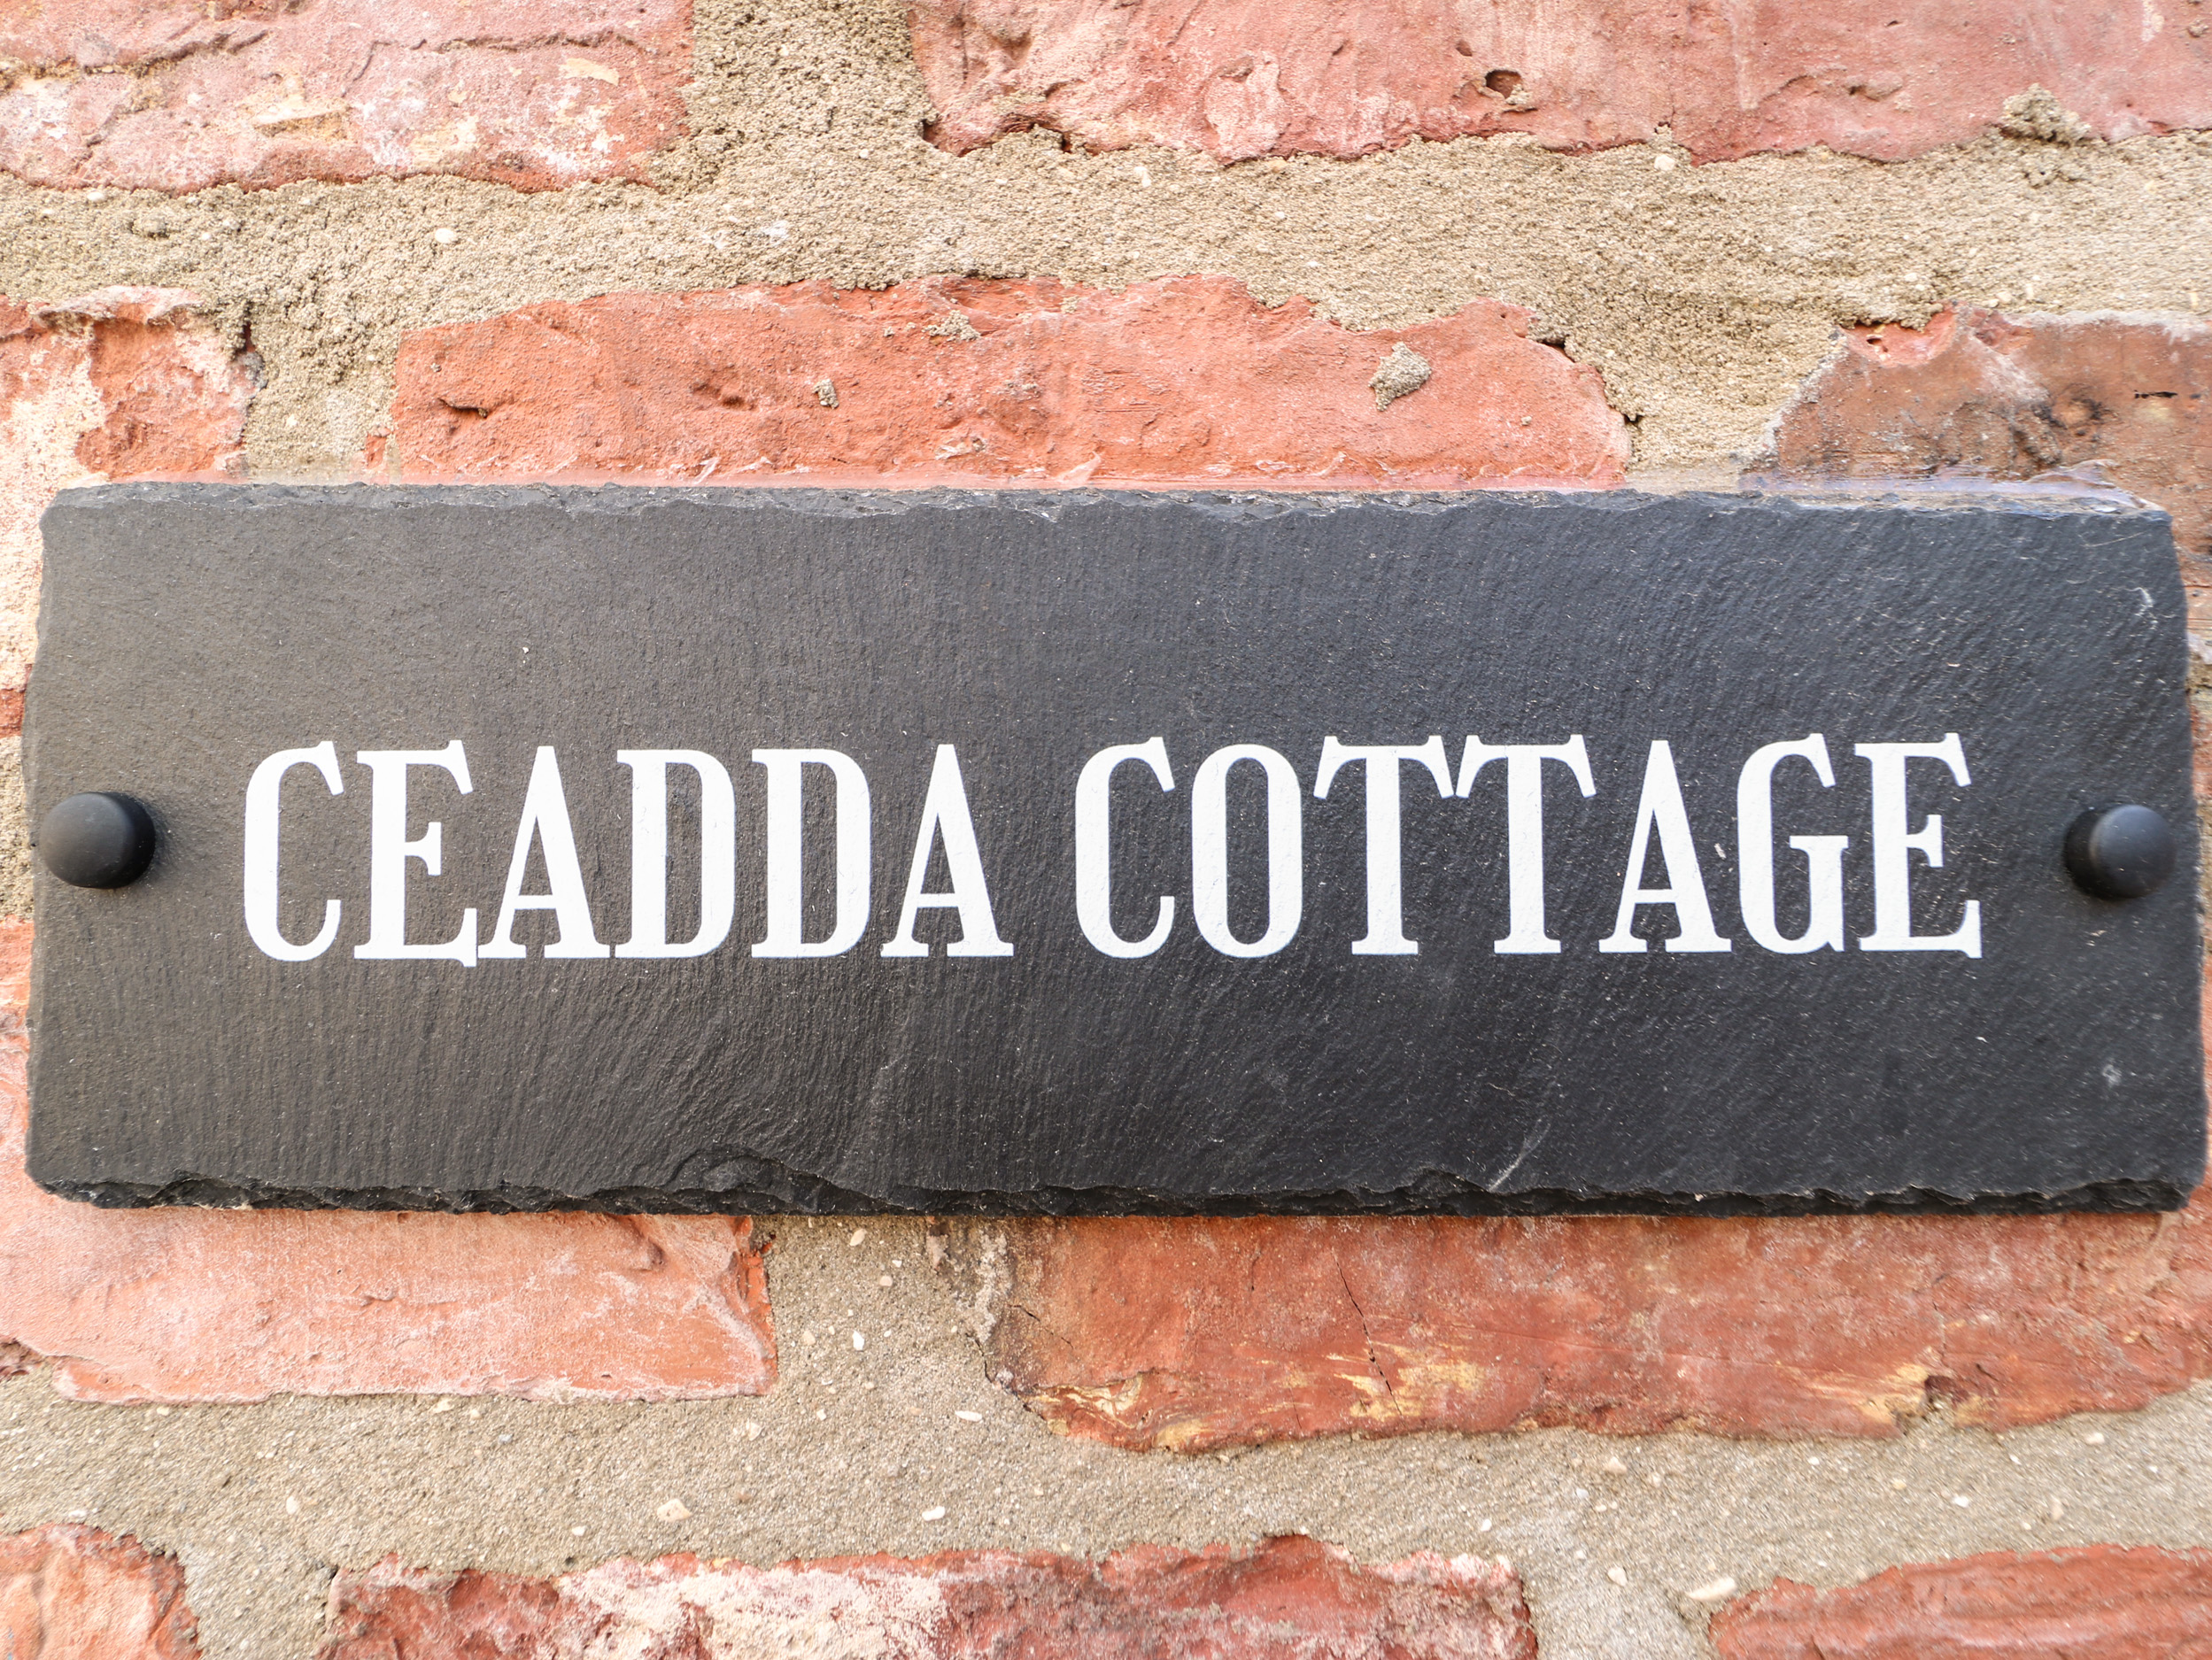 Ceadda Cottage, Drax, North Yorkshire 